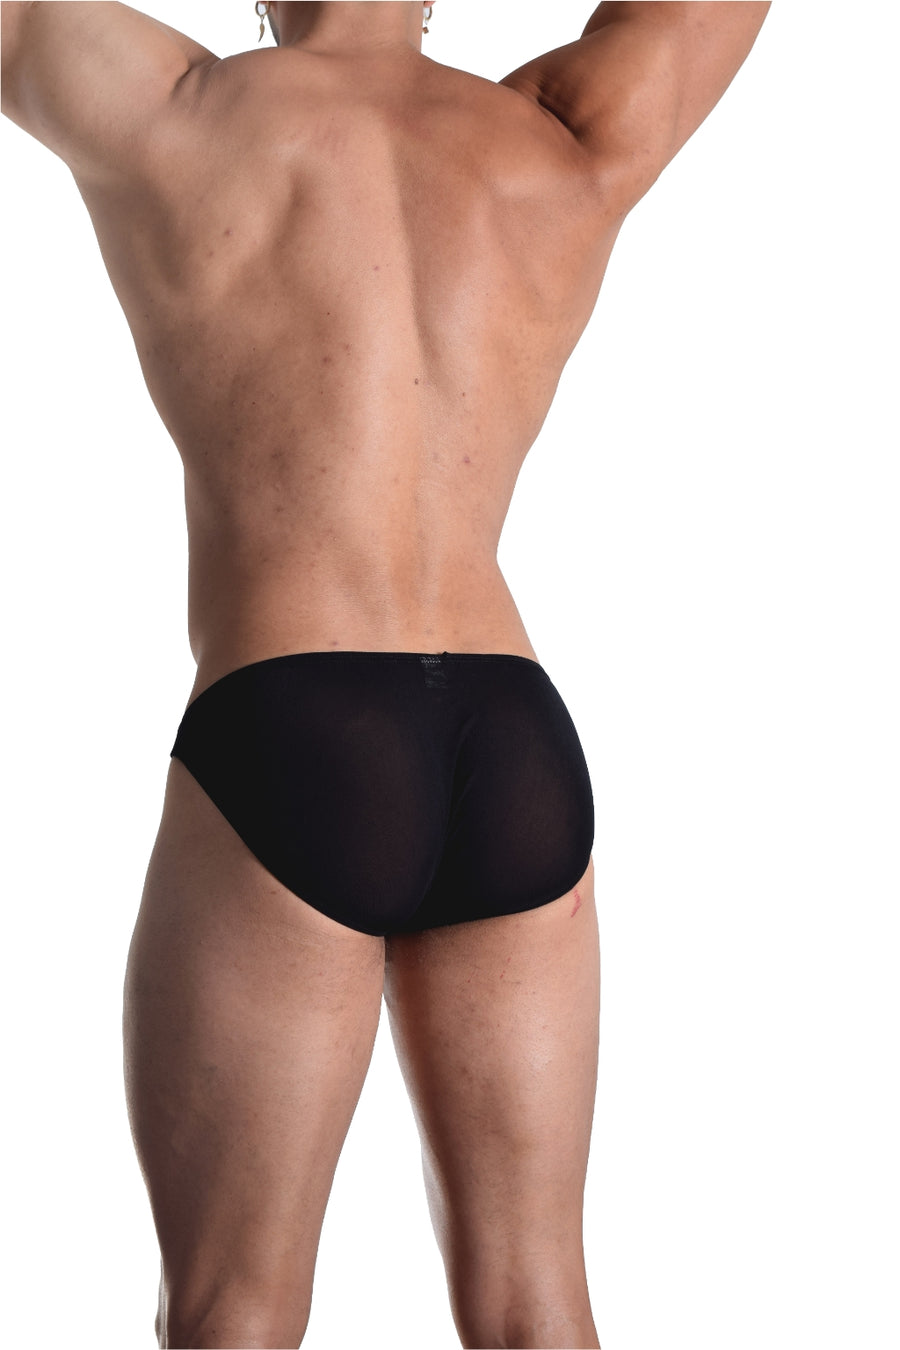 BfM Mens Sheer Net Thong Pouch Underwear – Bodywear for Men